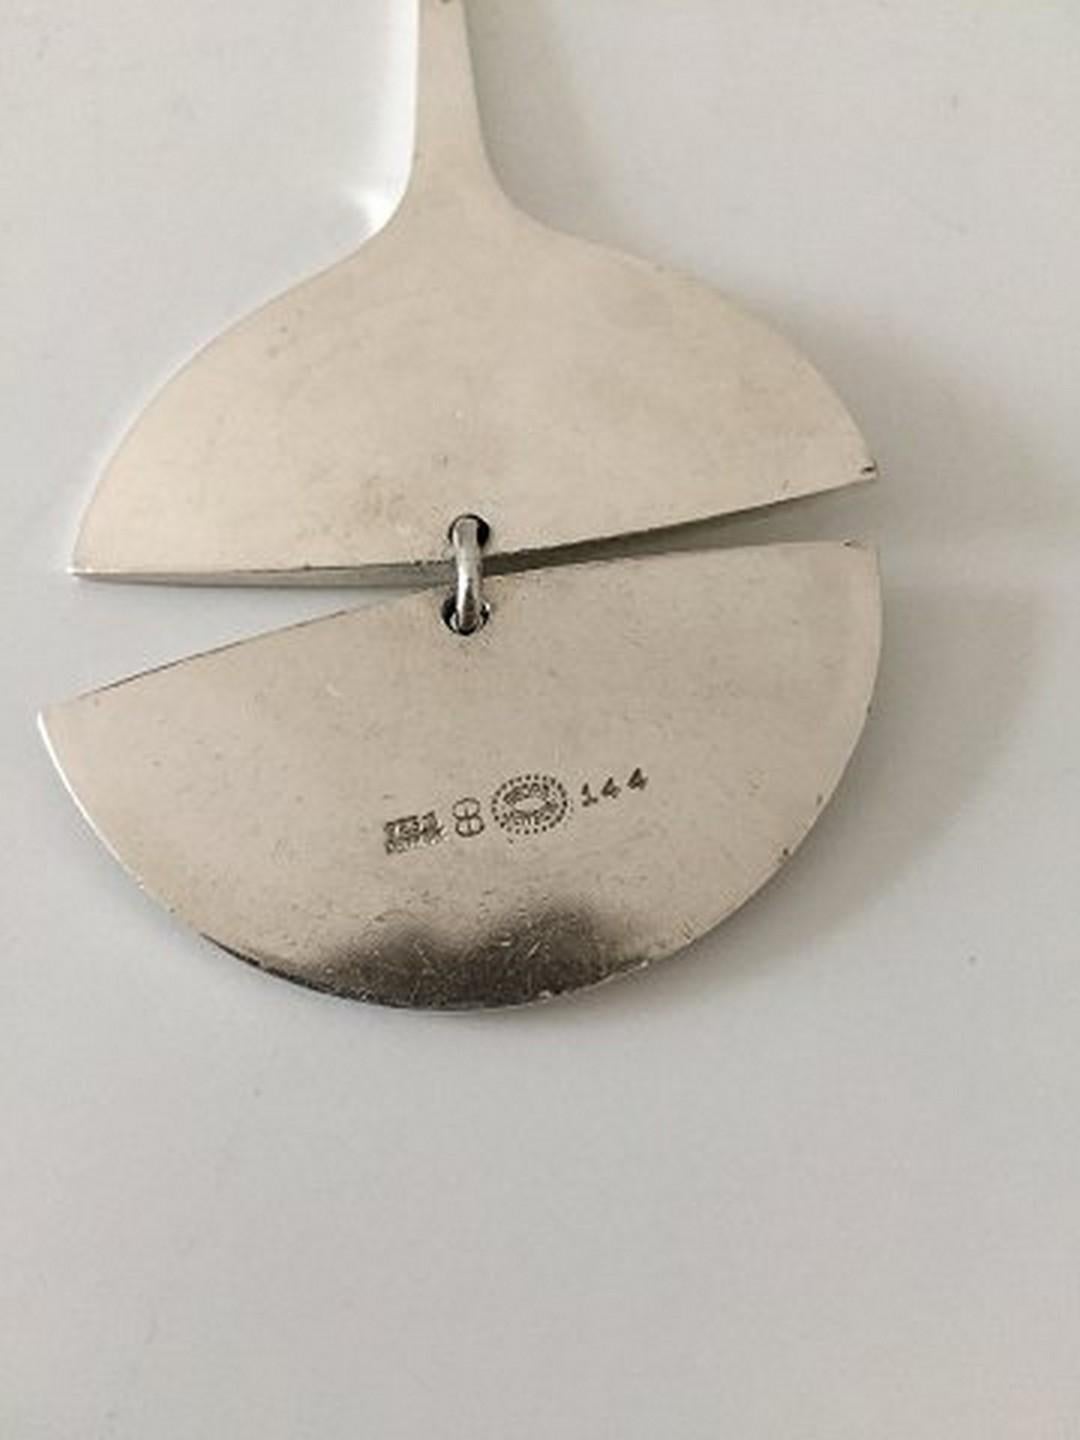 Georg Jensen Sterling Silver Pendant by Bent Gabrielsen No 144. Measures 9.8 cm. Weighs 45.5 g / 1.60 oz.